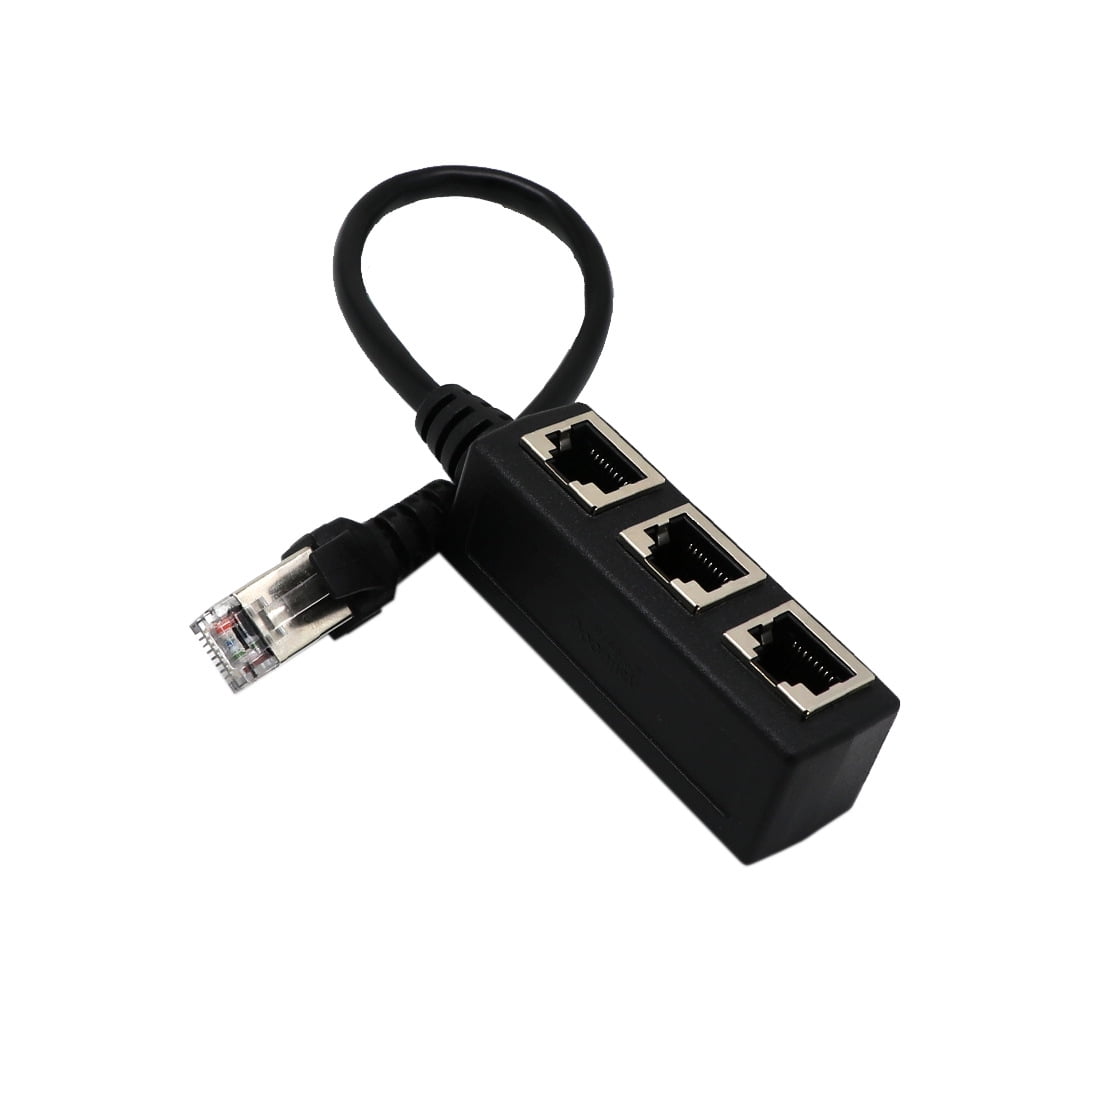 LAN Ethernet Network Cable RJ45 Splitter Extender Plug Adapter Connector O0 